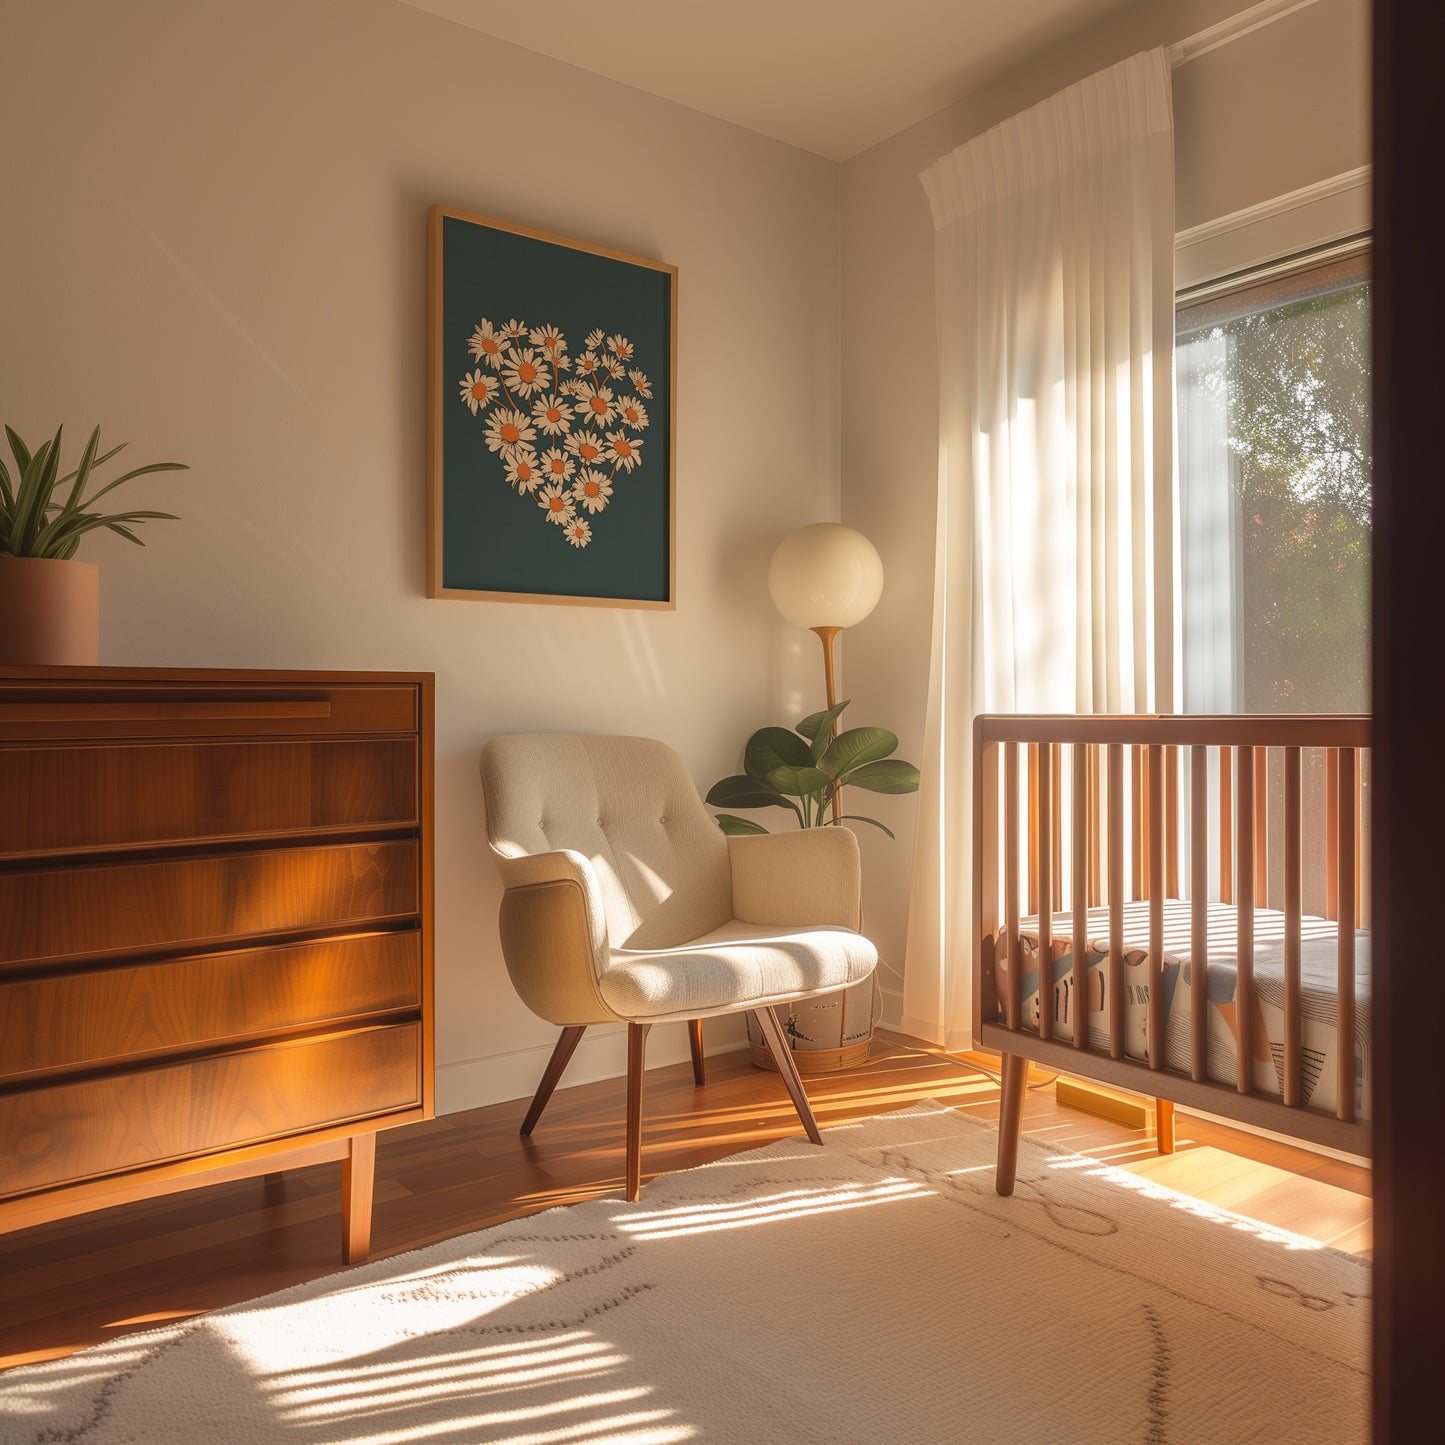 Cozy nursery room with crib, armchair, and warm sunlight through the window.